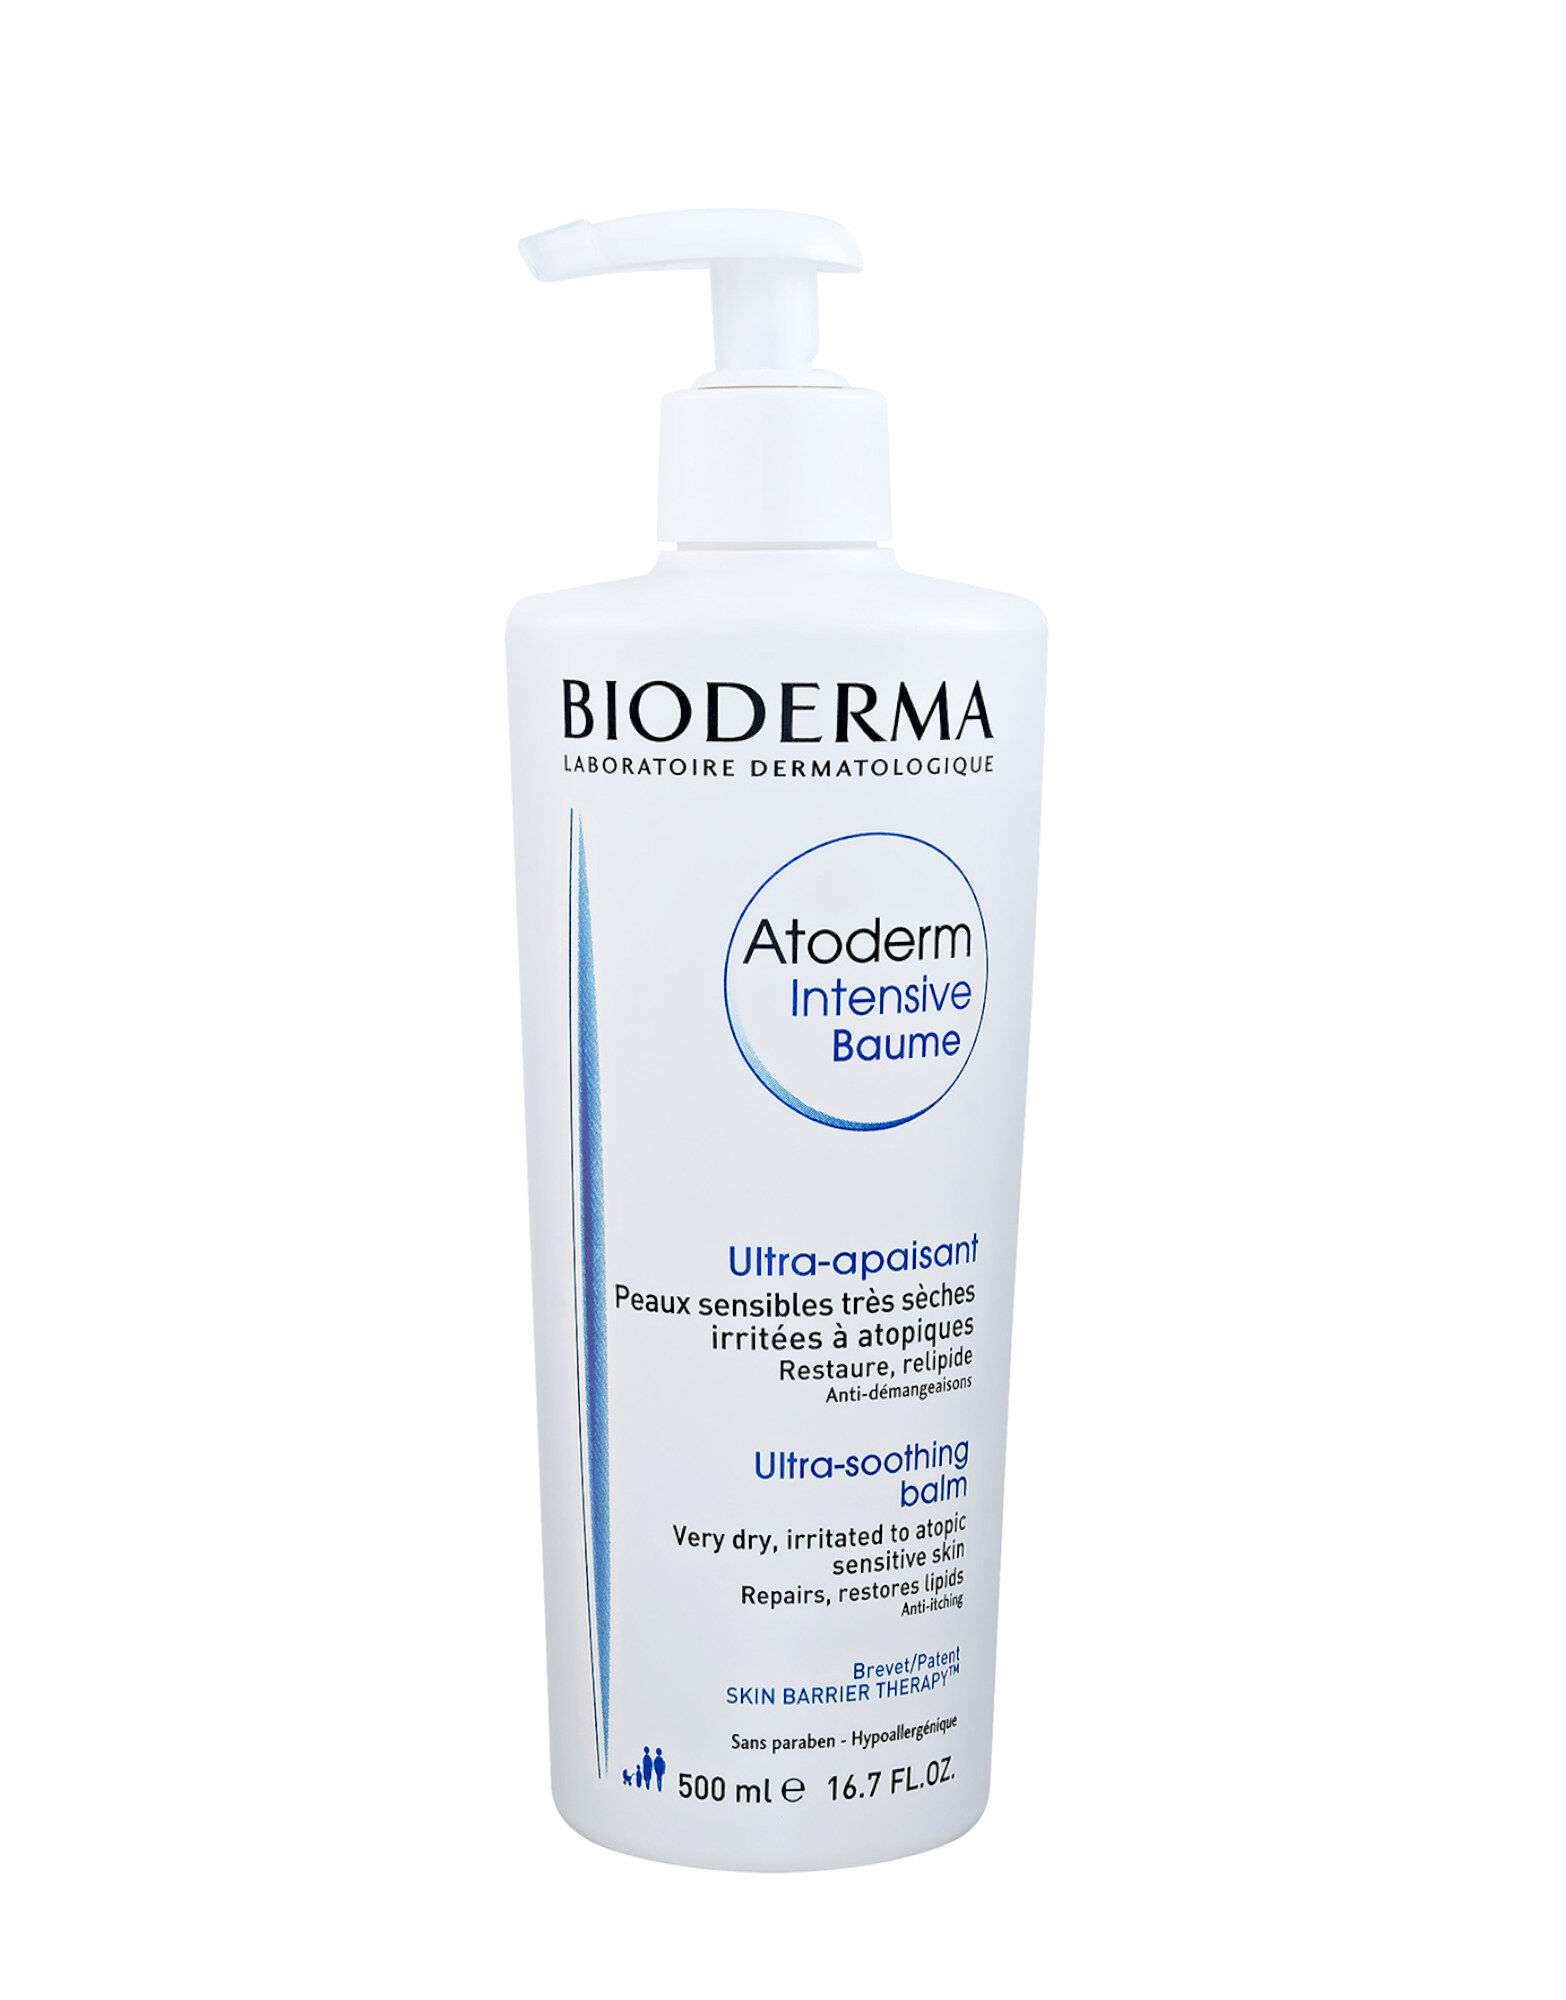 Bioderma Atoderm Intensive Baume 500ml